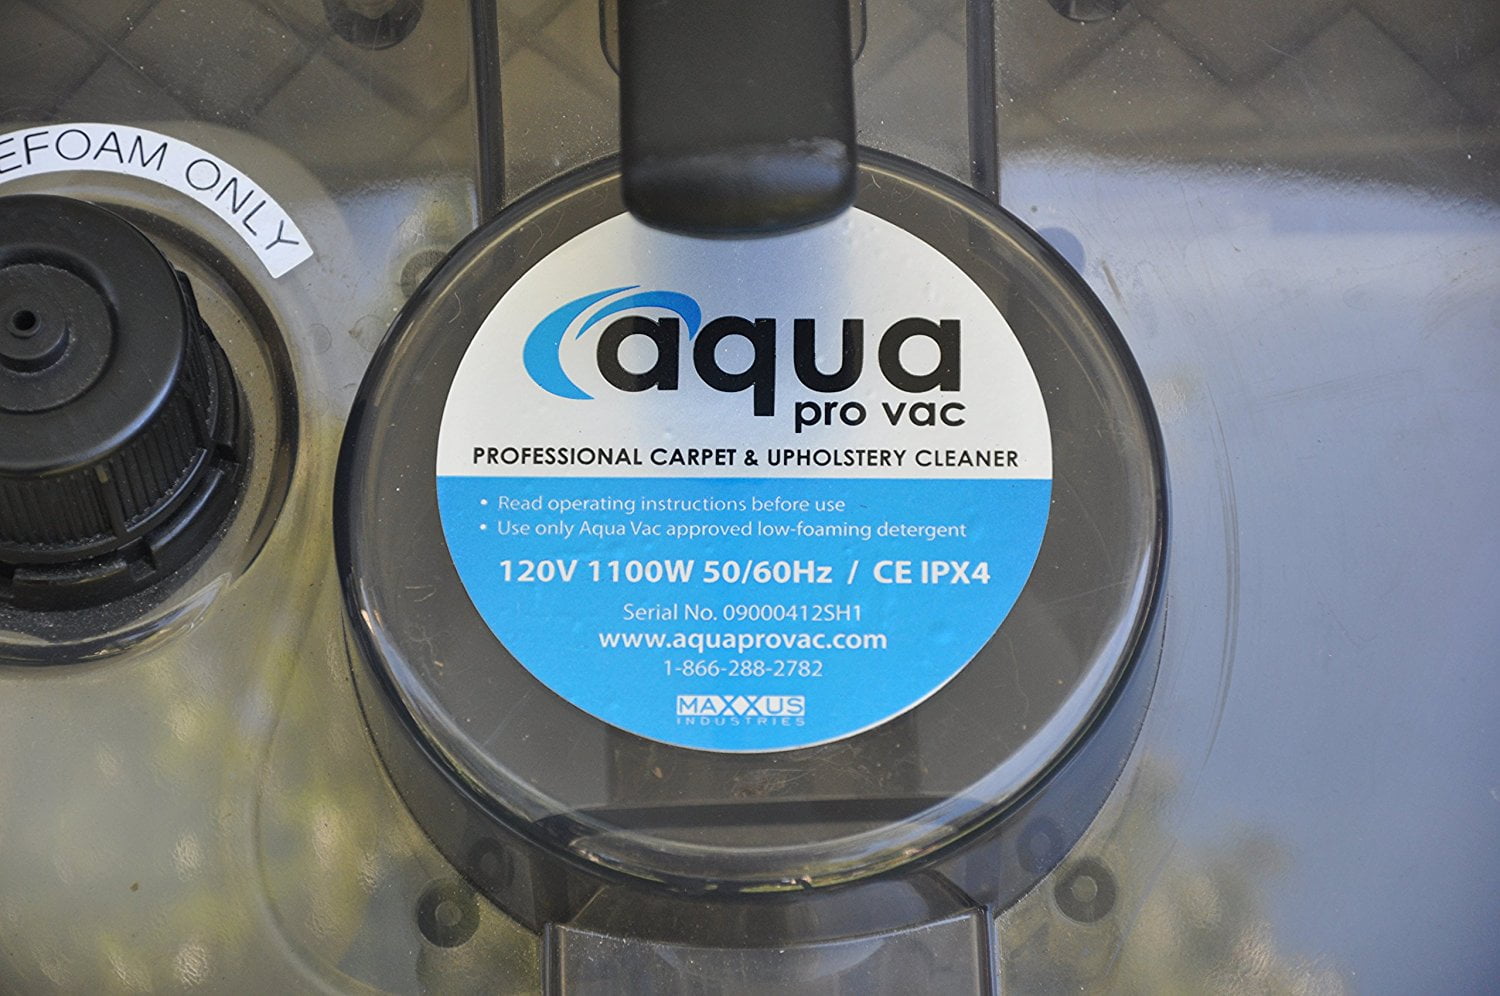 Spotter for Auto Detailing Aqua Pro Vac Shampooer Carpet Extractor Cleaner 